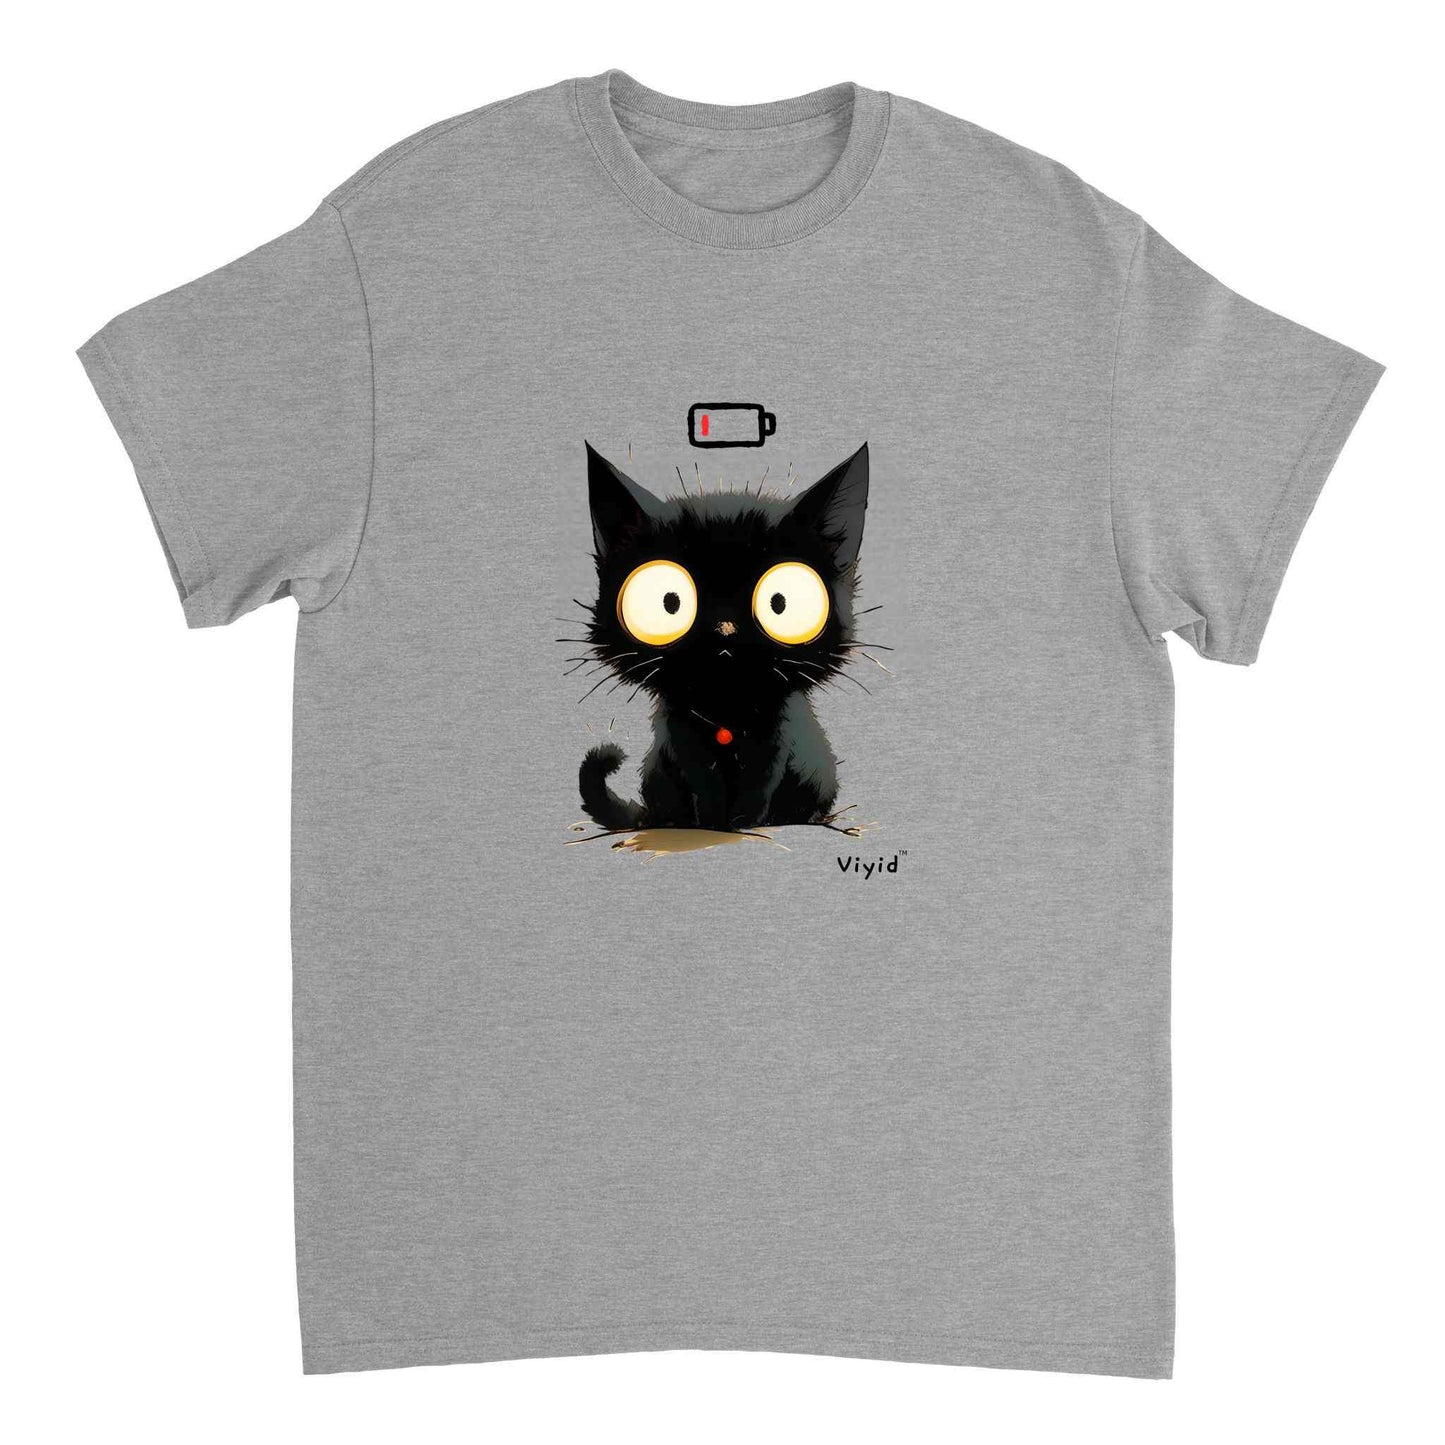 Low battery black cat adult t-shirt sports grey